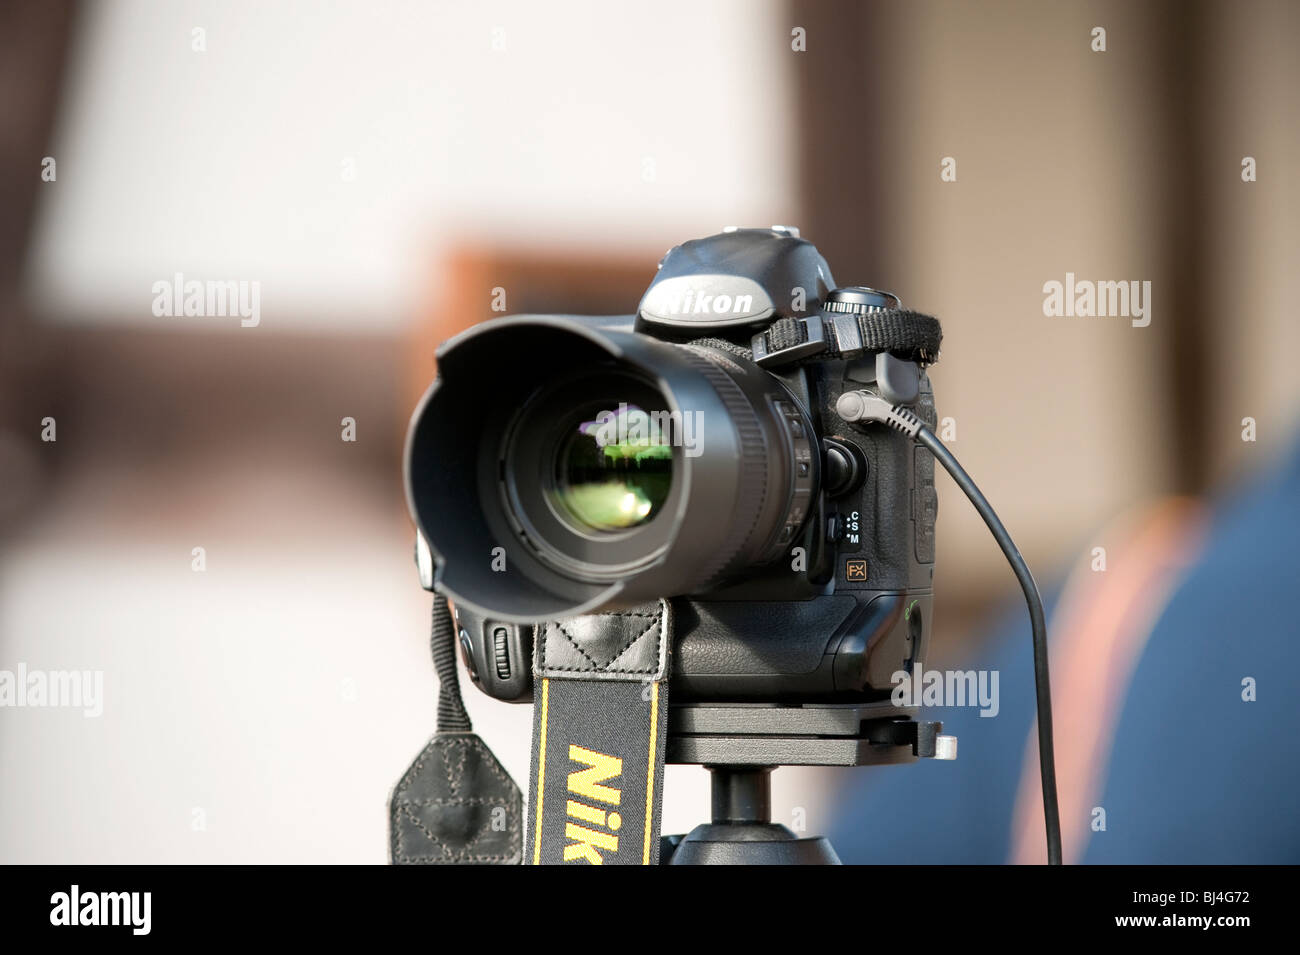 Nikon Digitalkamera auf Stativ mit Fernauslöser Stockfoto